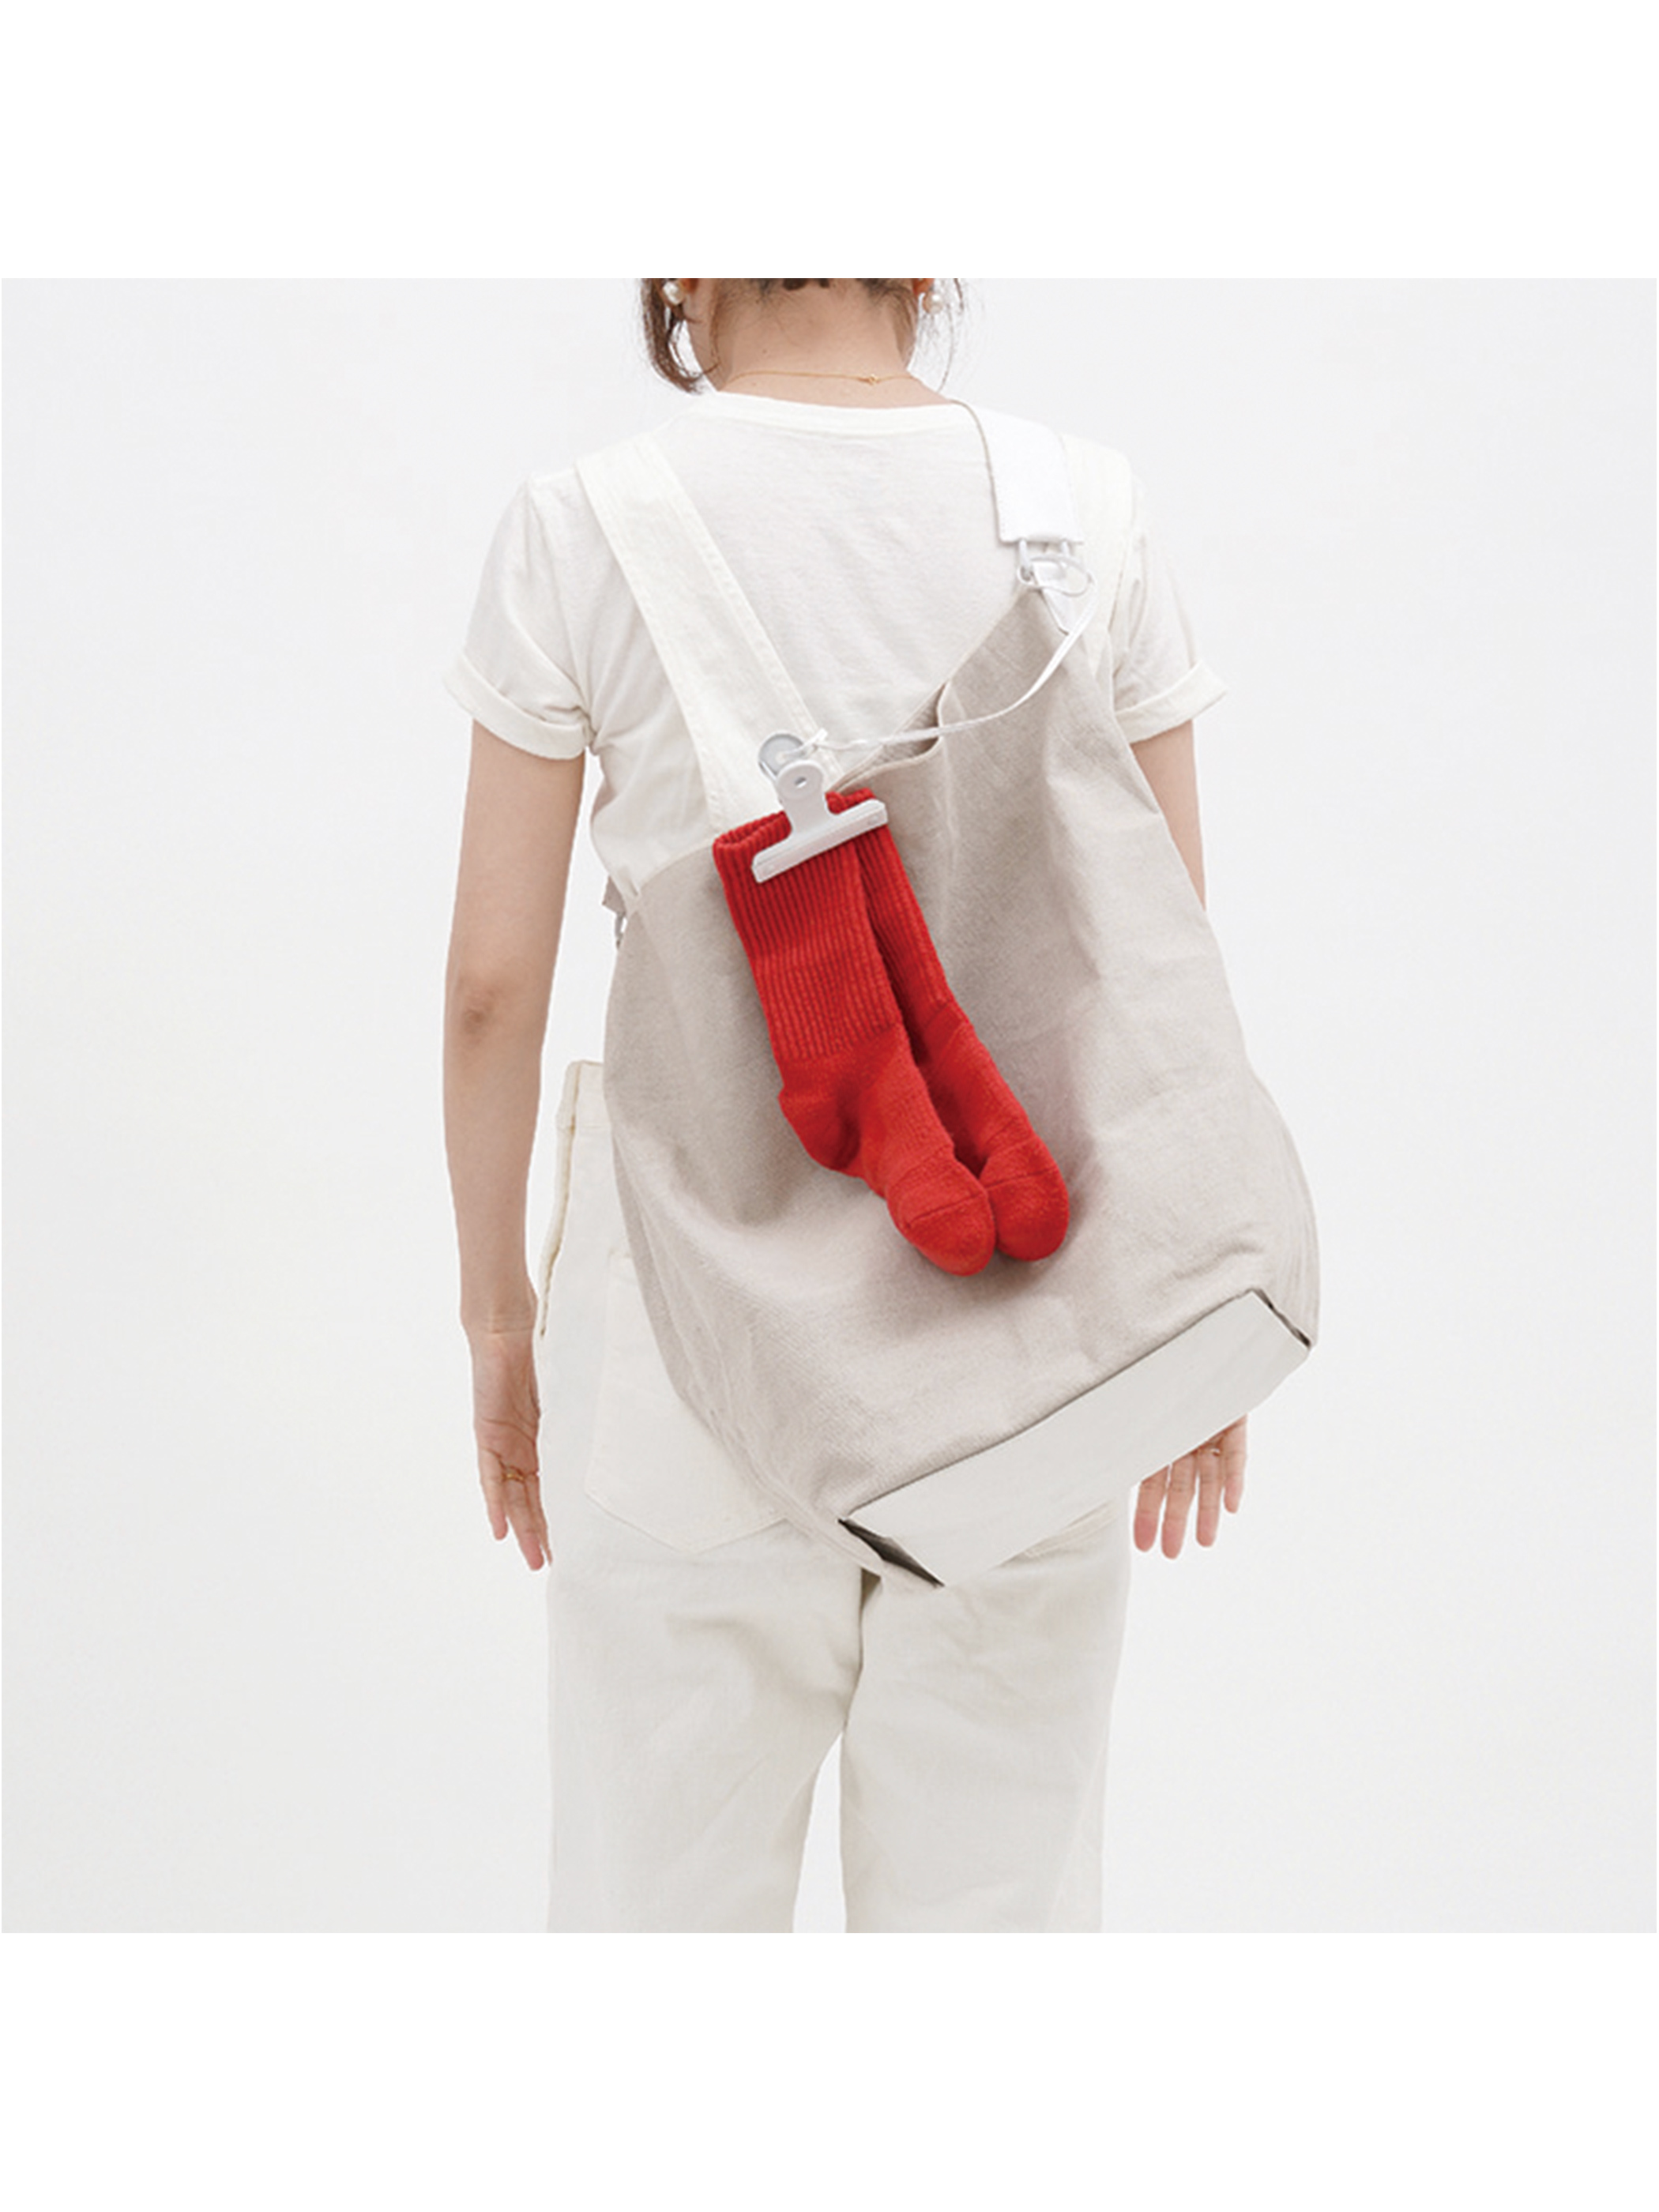 JINMON / CLIP shoulder (bag) - sakumotto